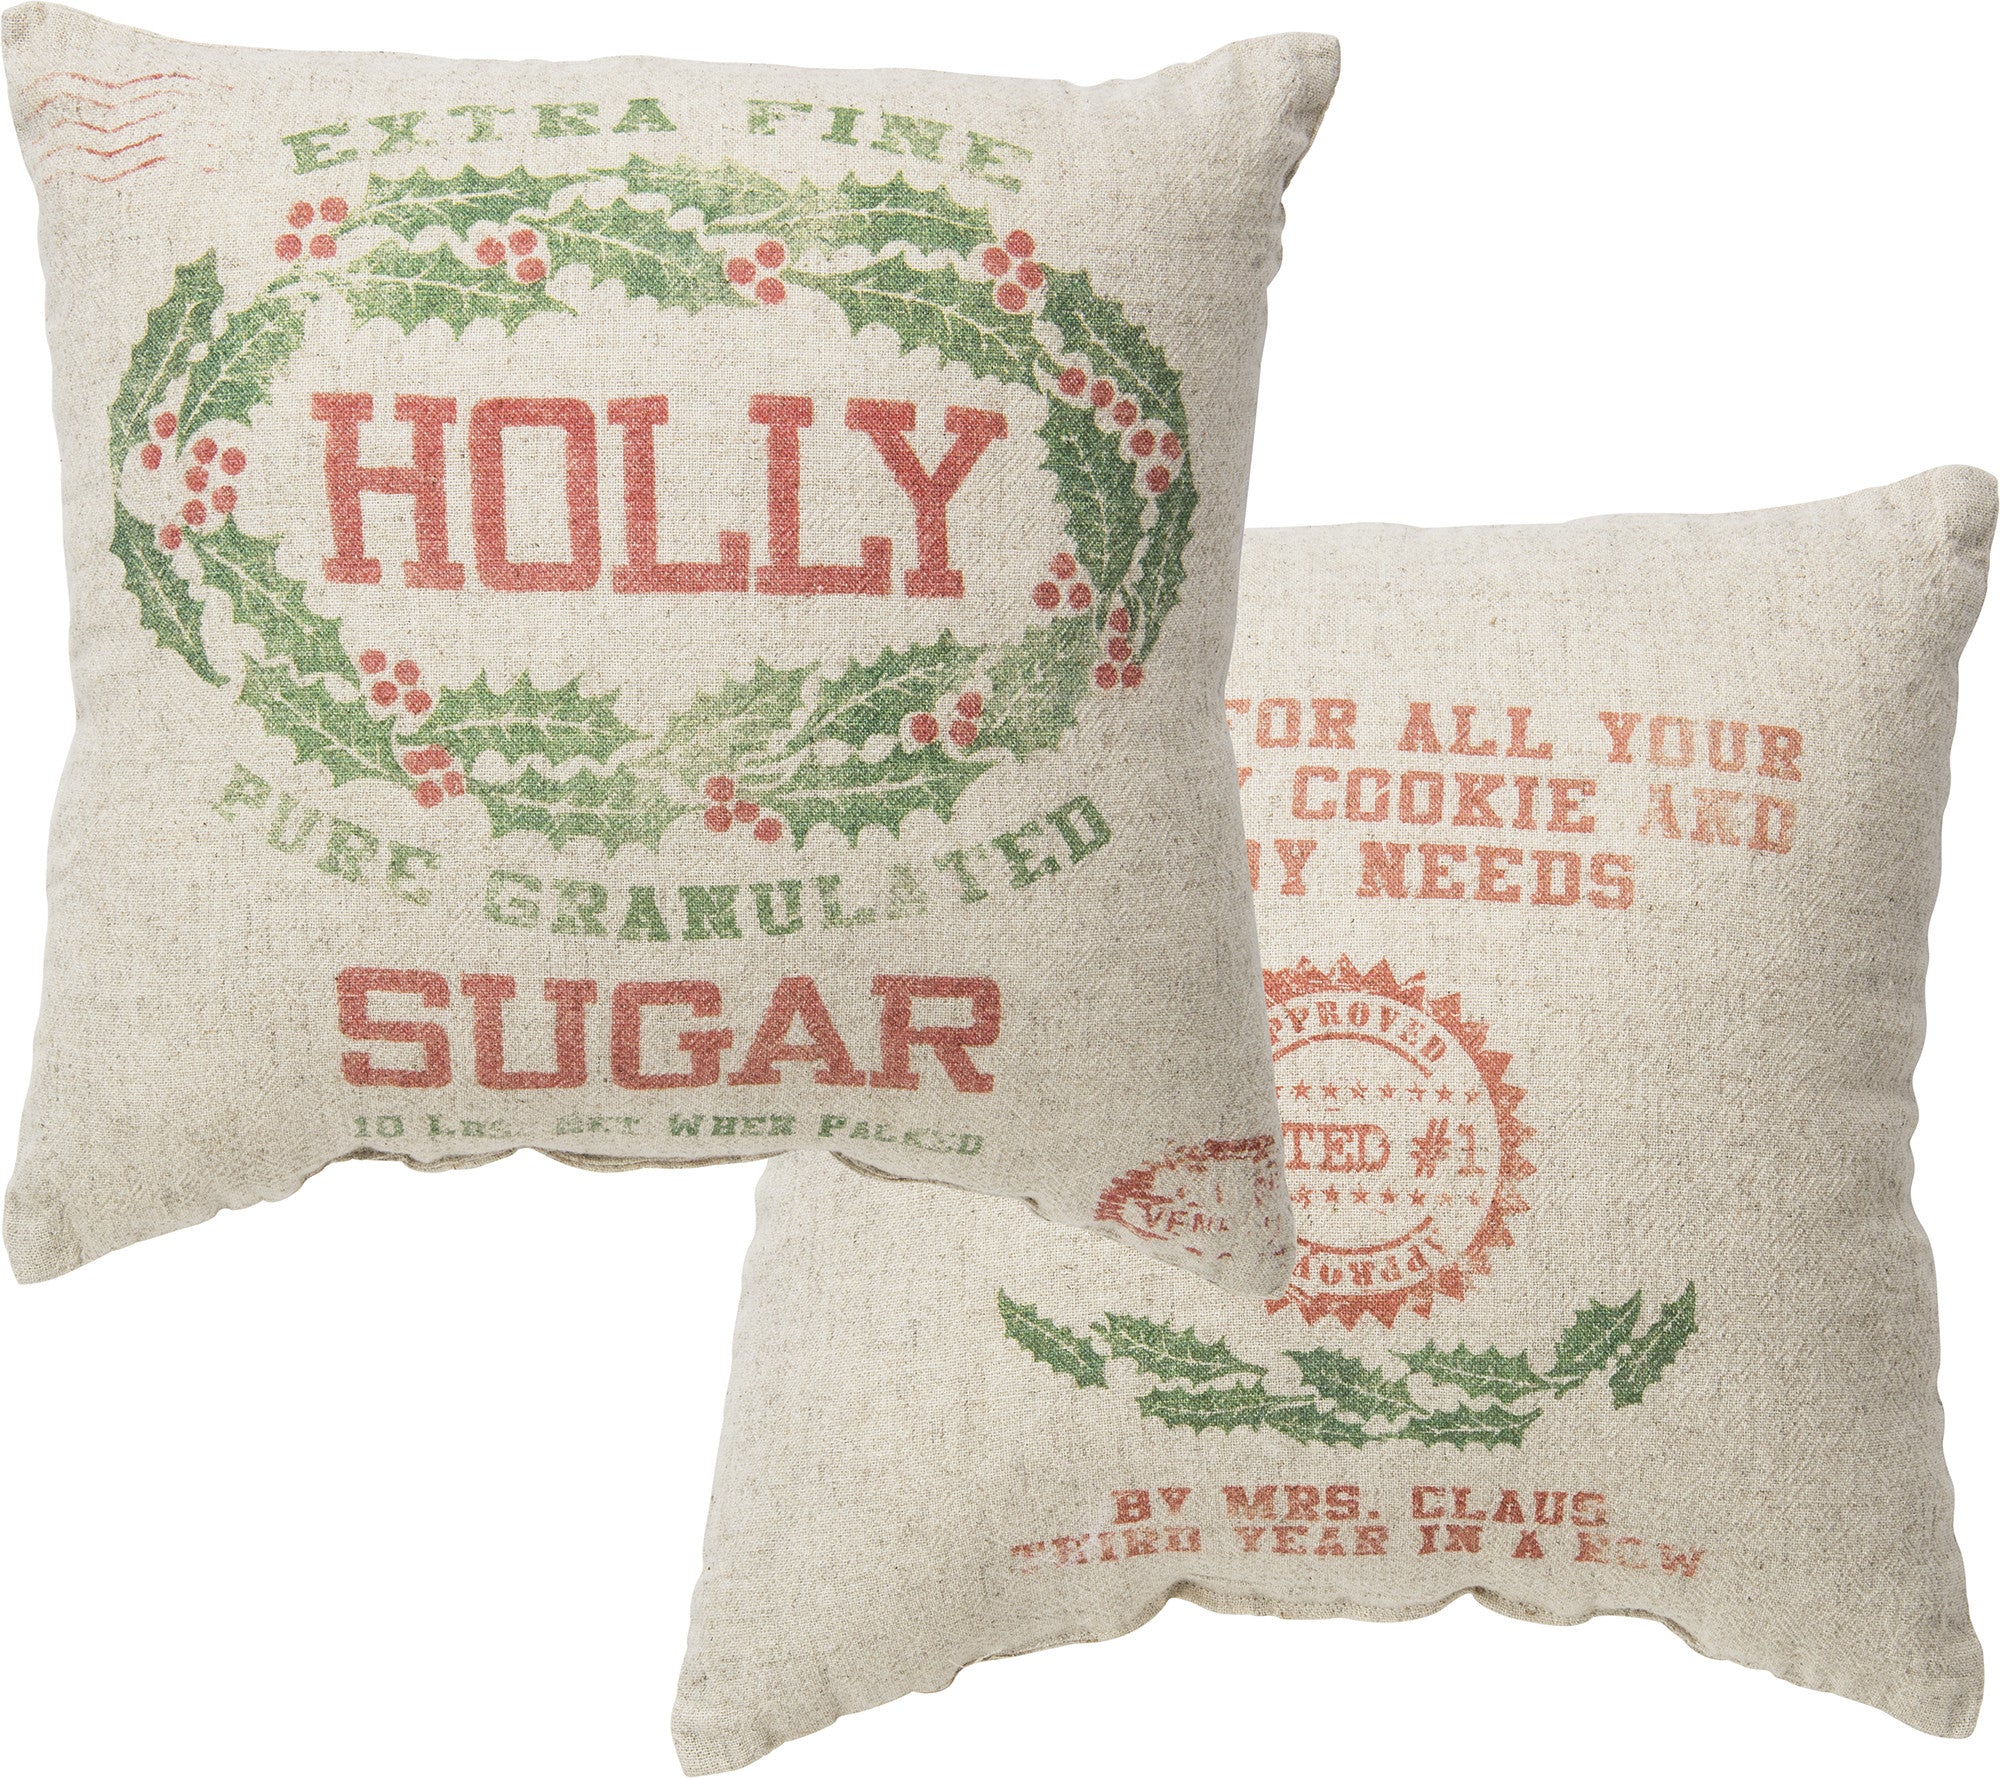 Holly Sugar Pillow - Christmas Pillow